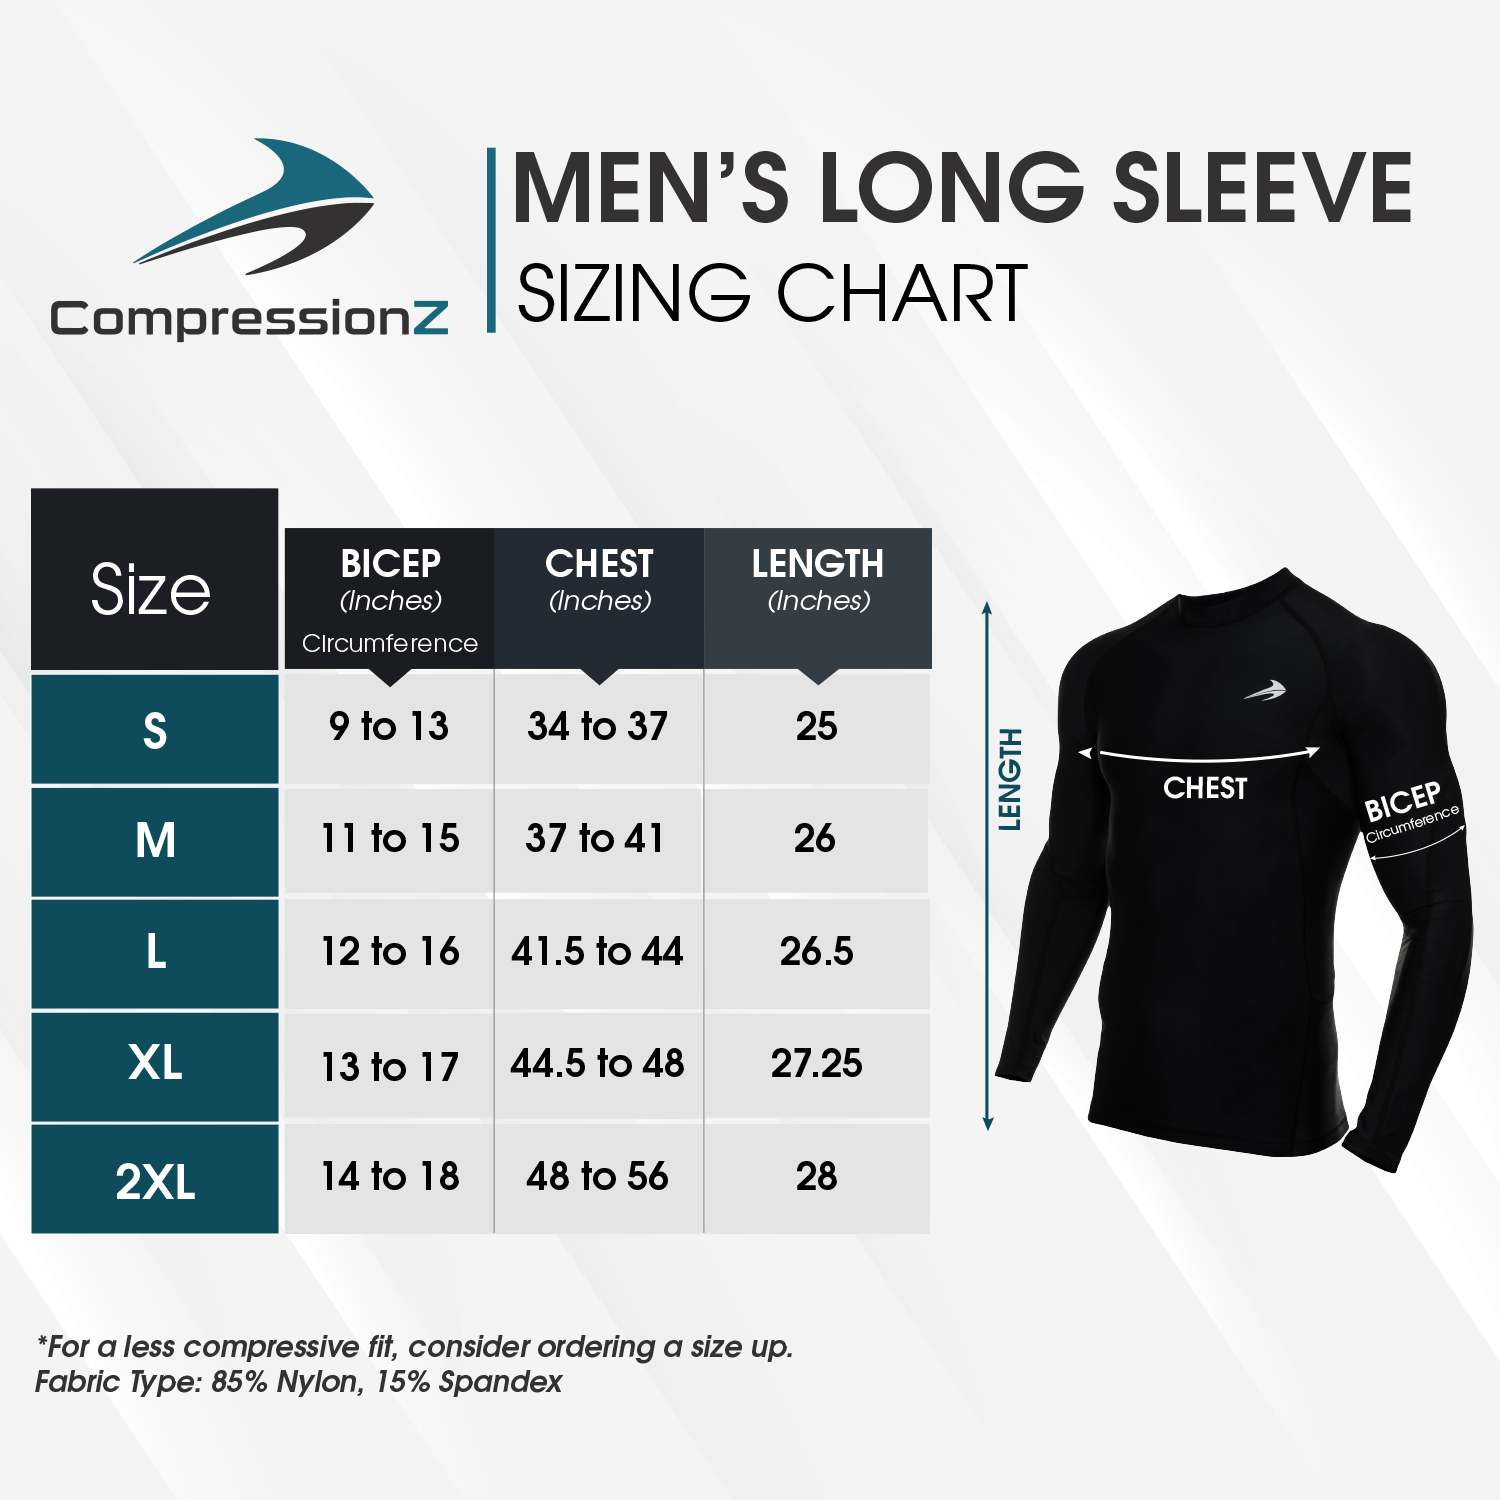 Men's Compression Long Sleeve Shirt - Black